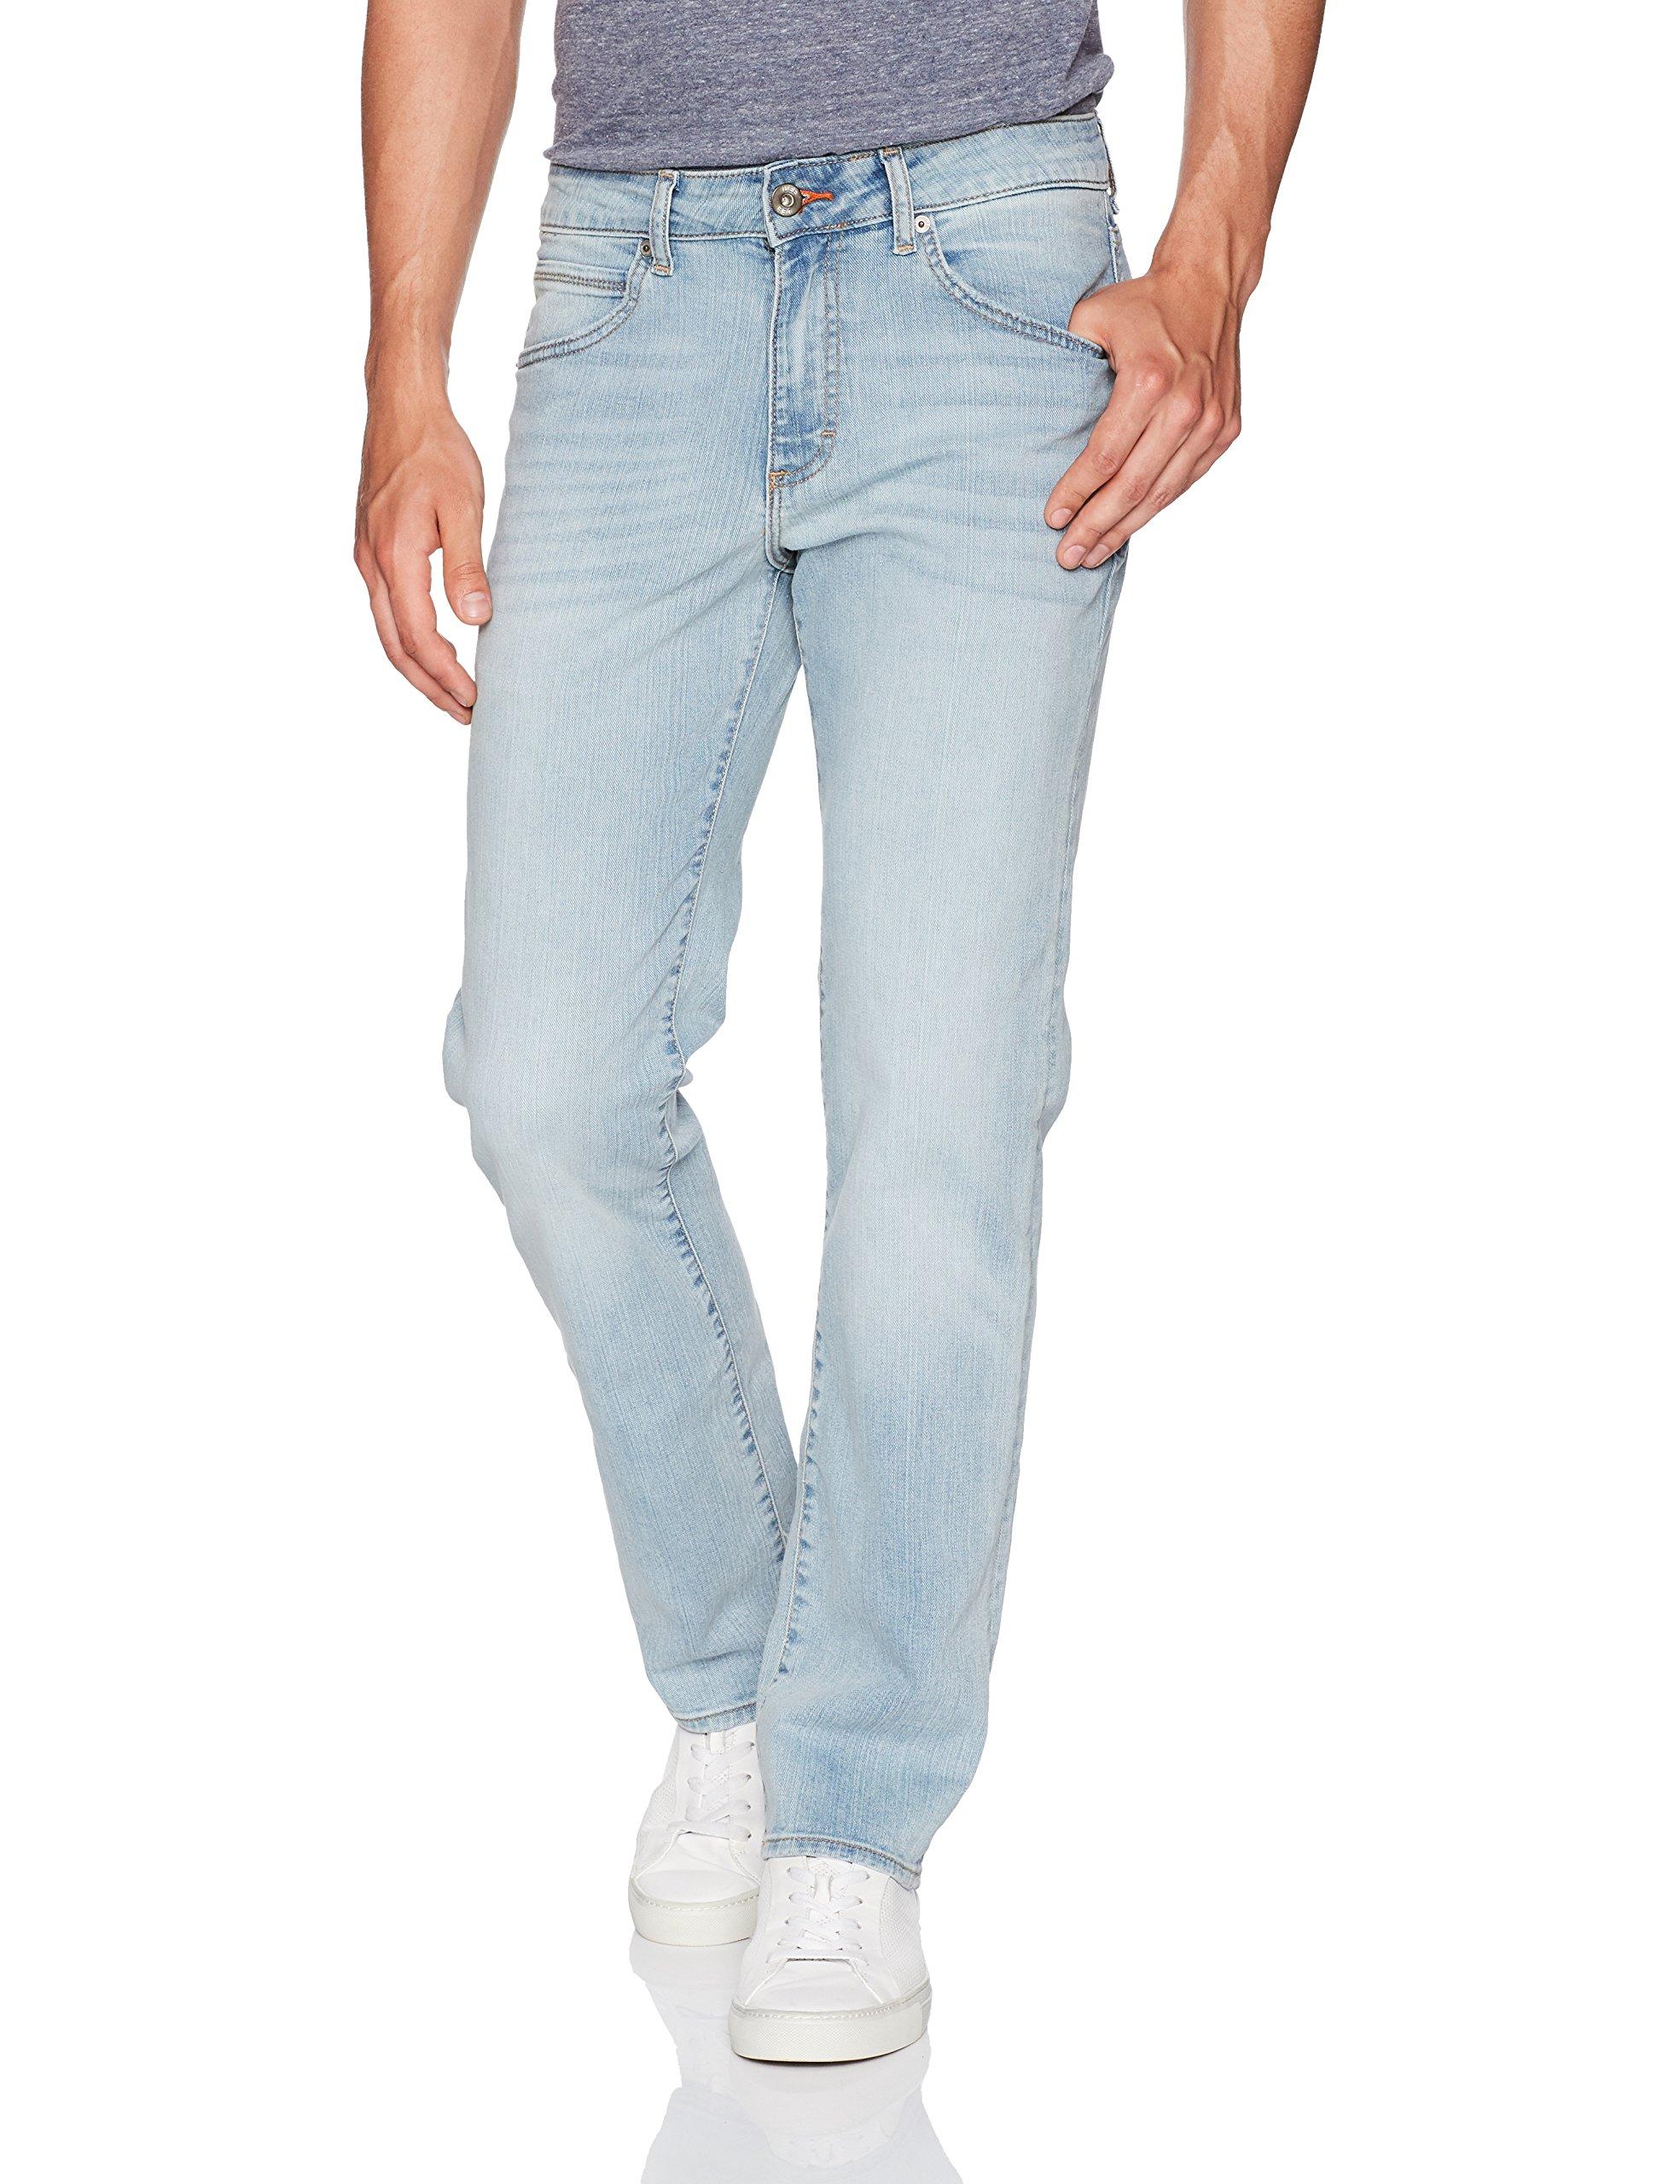 Lee Jeans Denim Modern Series Straight-fit Jean in Blue for Men - Lyst